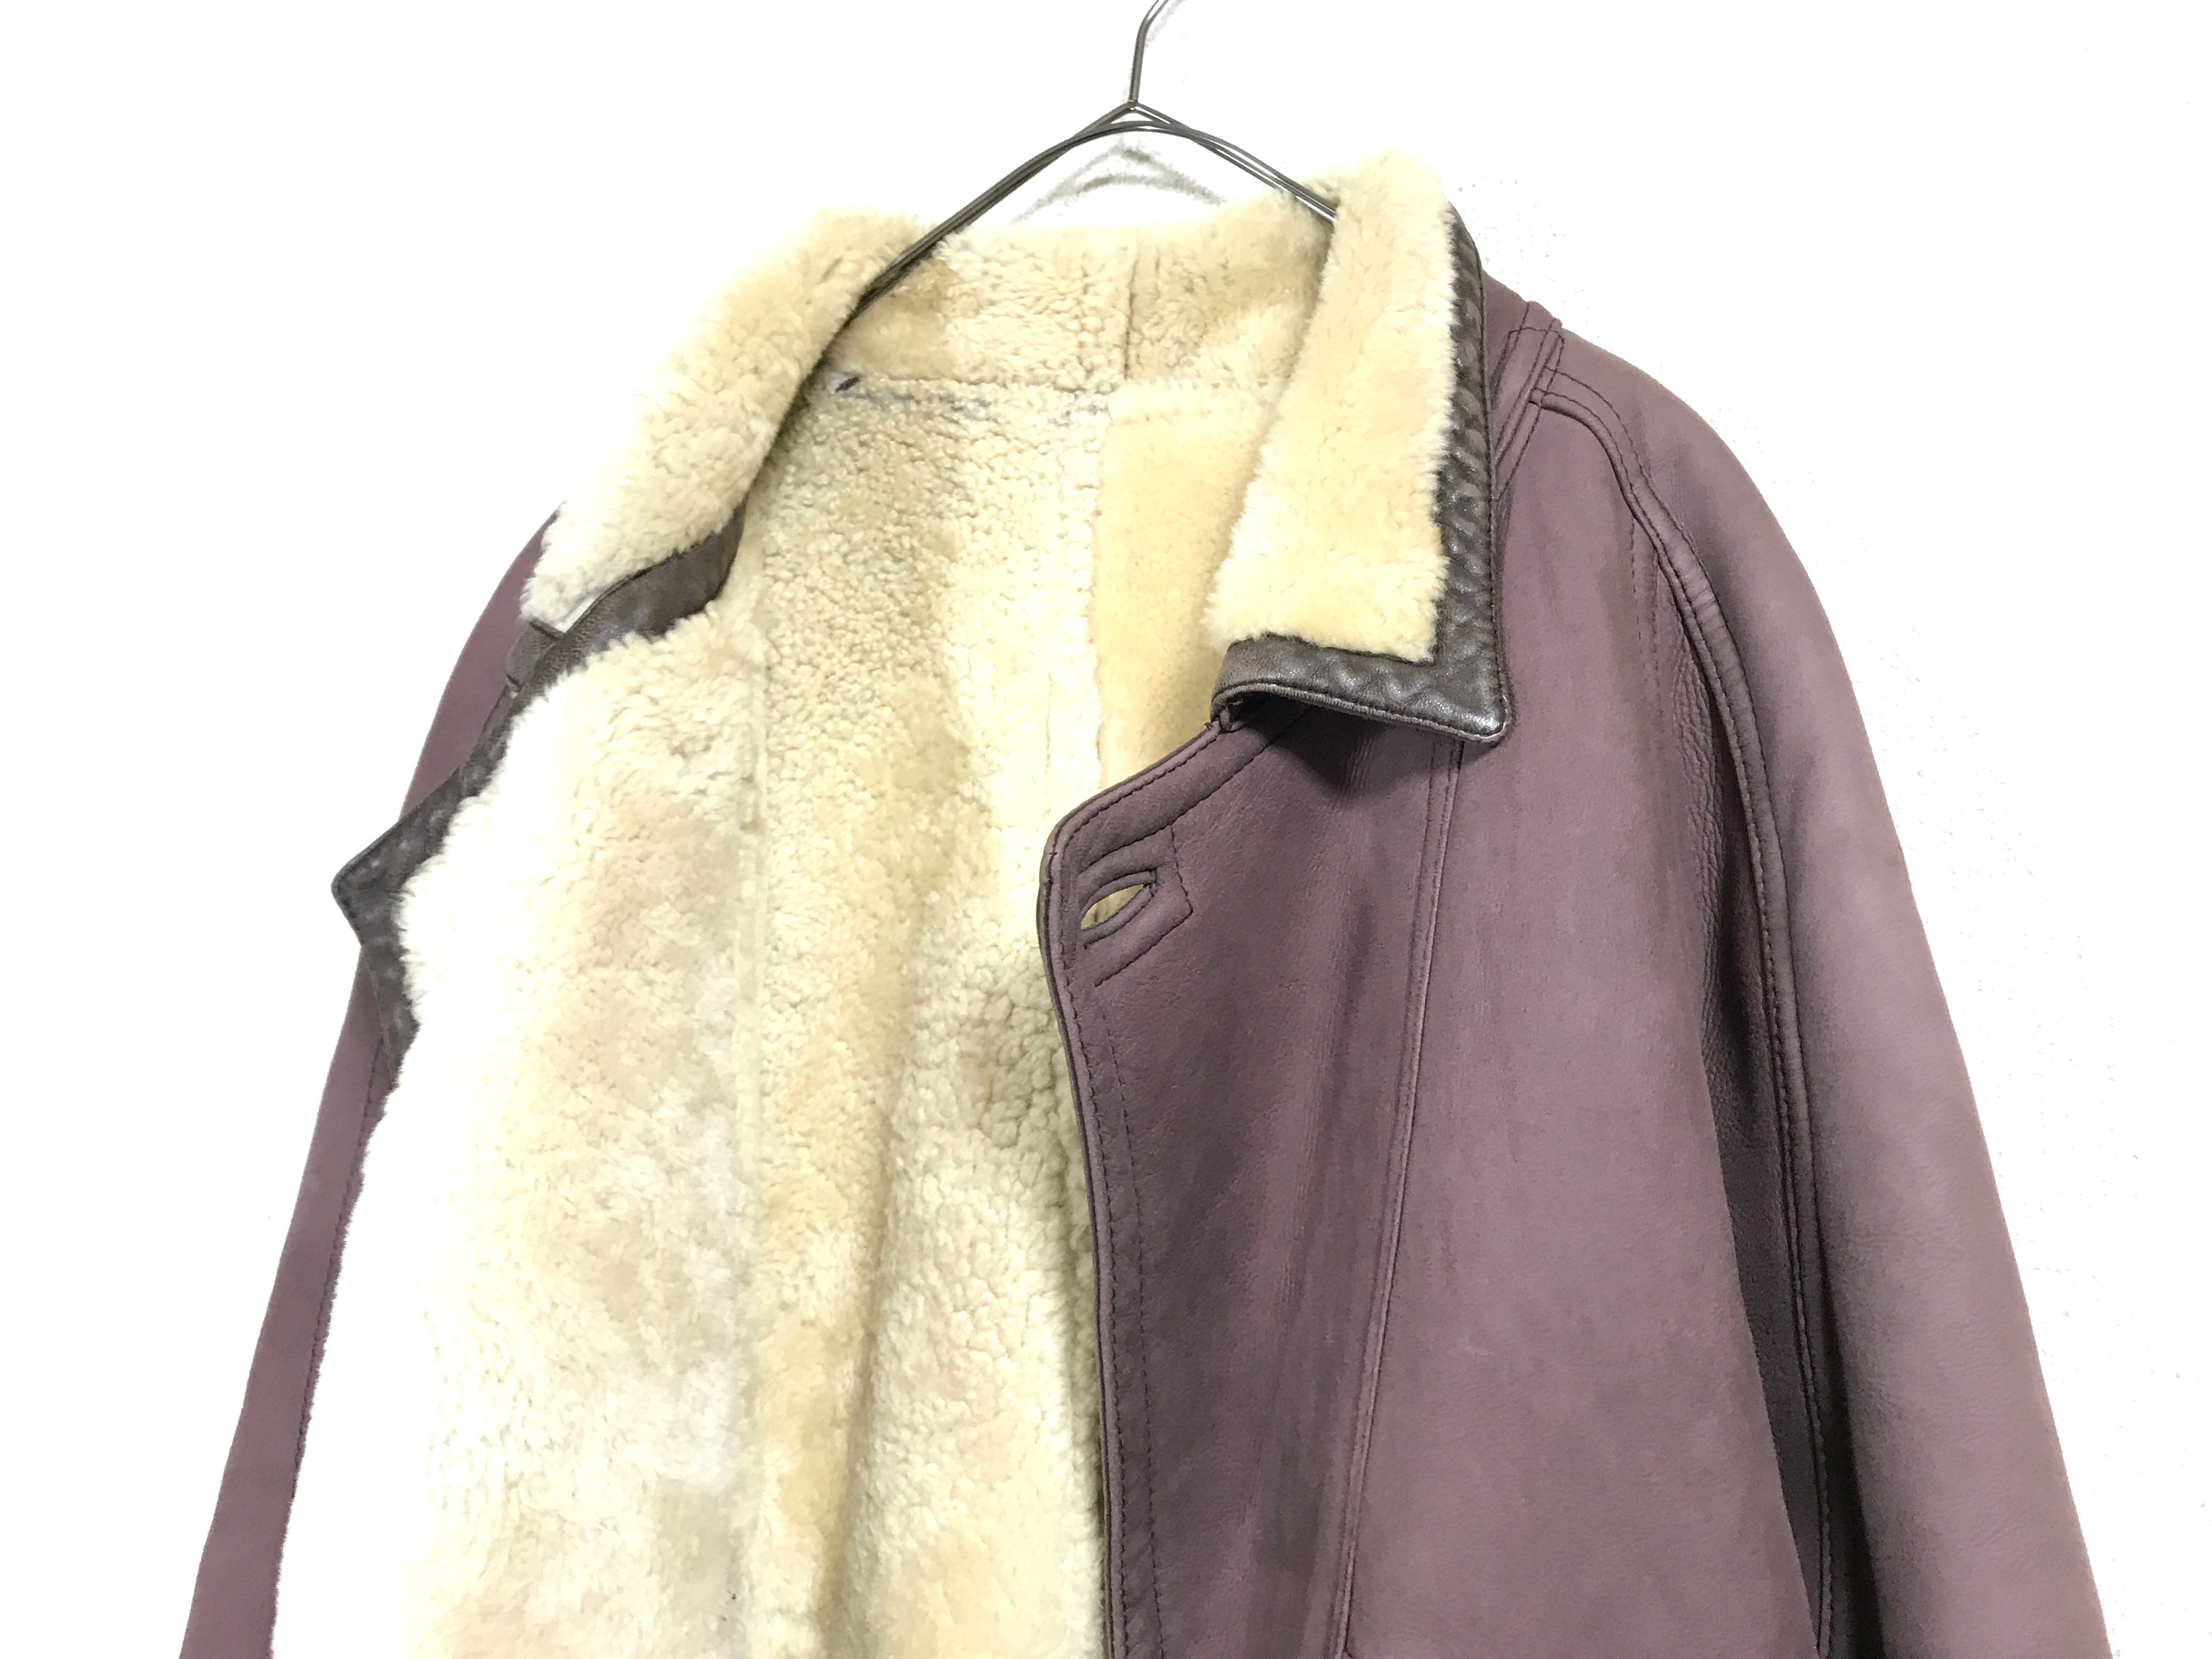 shearling (mouton) jacket